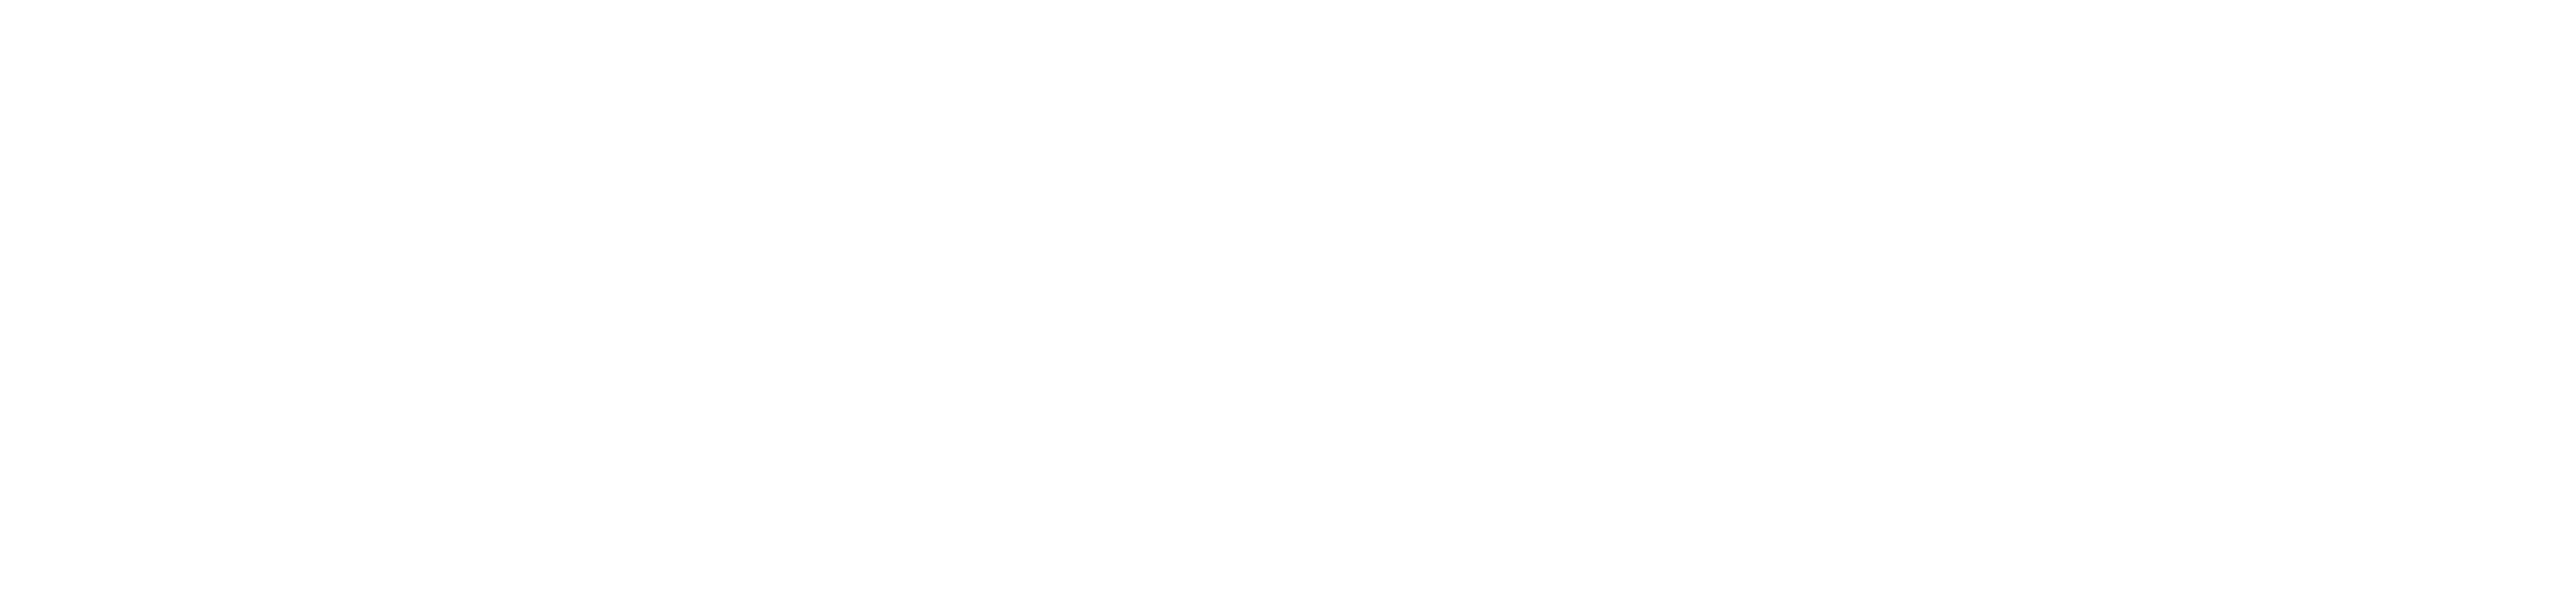 Techibytes